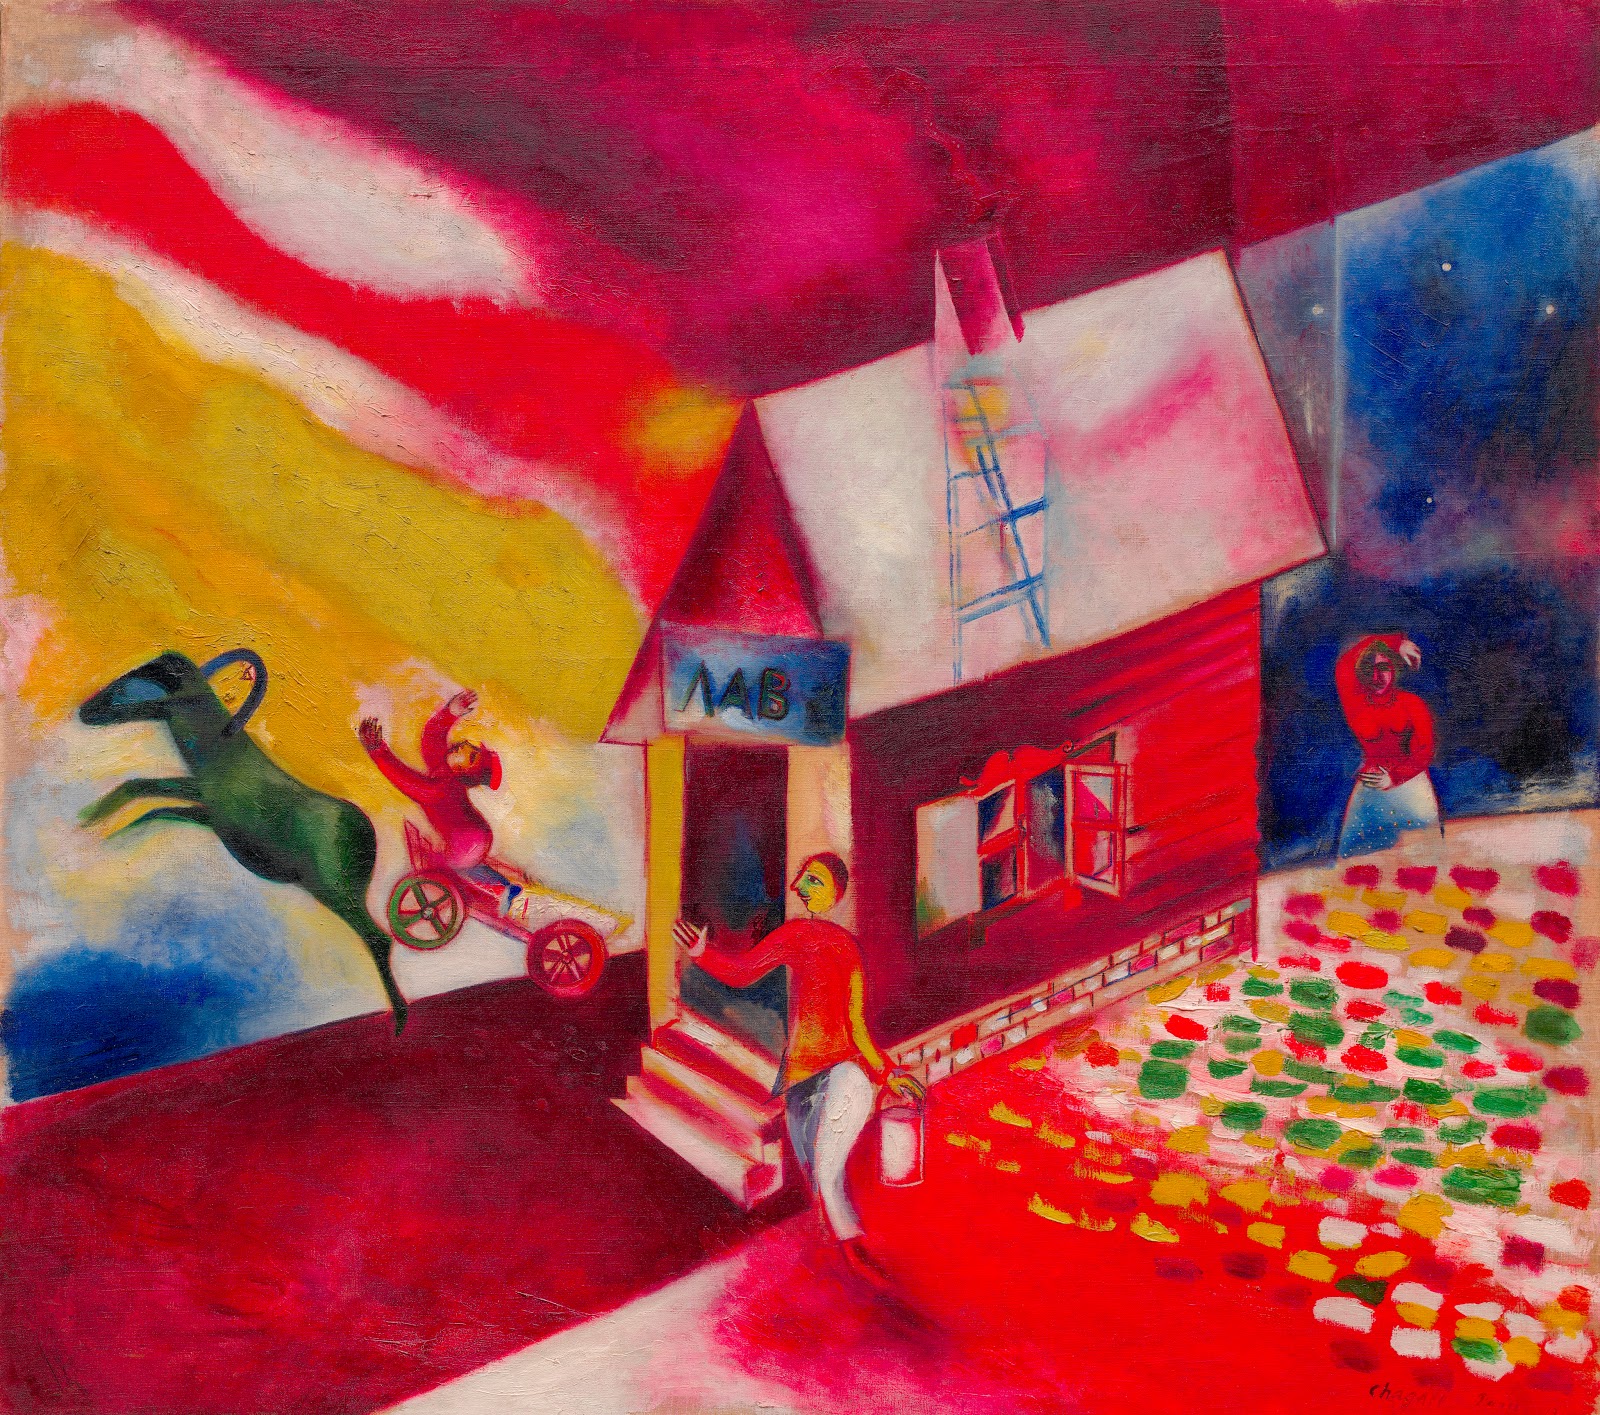 Marc+Chagall-1887-1985 (301).jpg